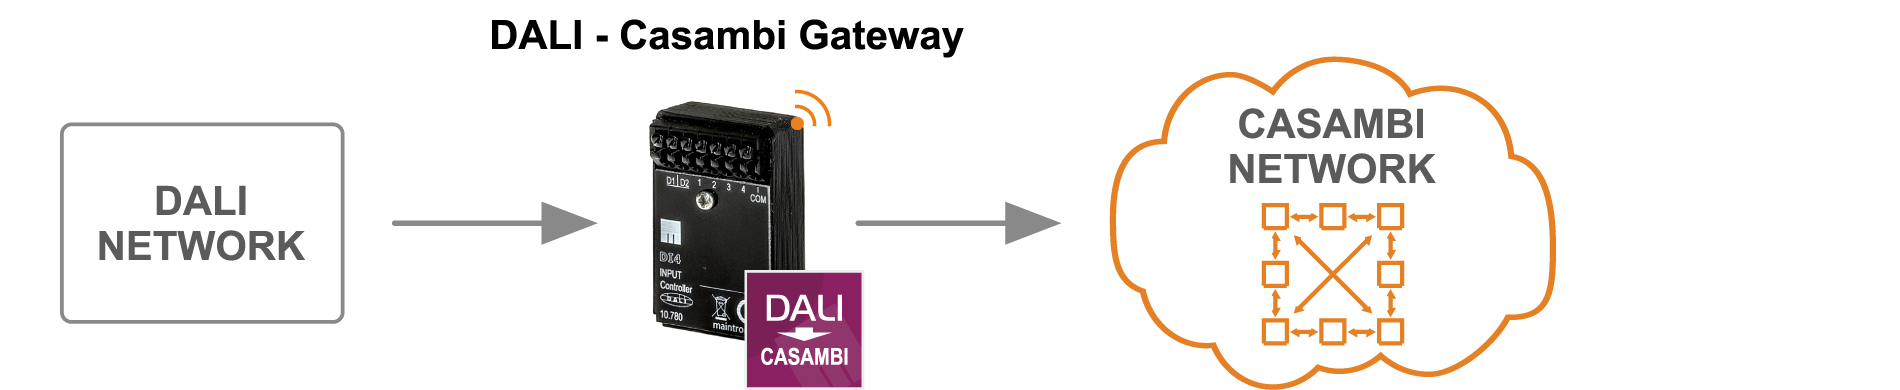 Casambi Input Controller - Anwendung als DALI Gateway